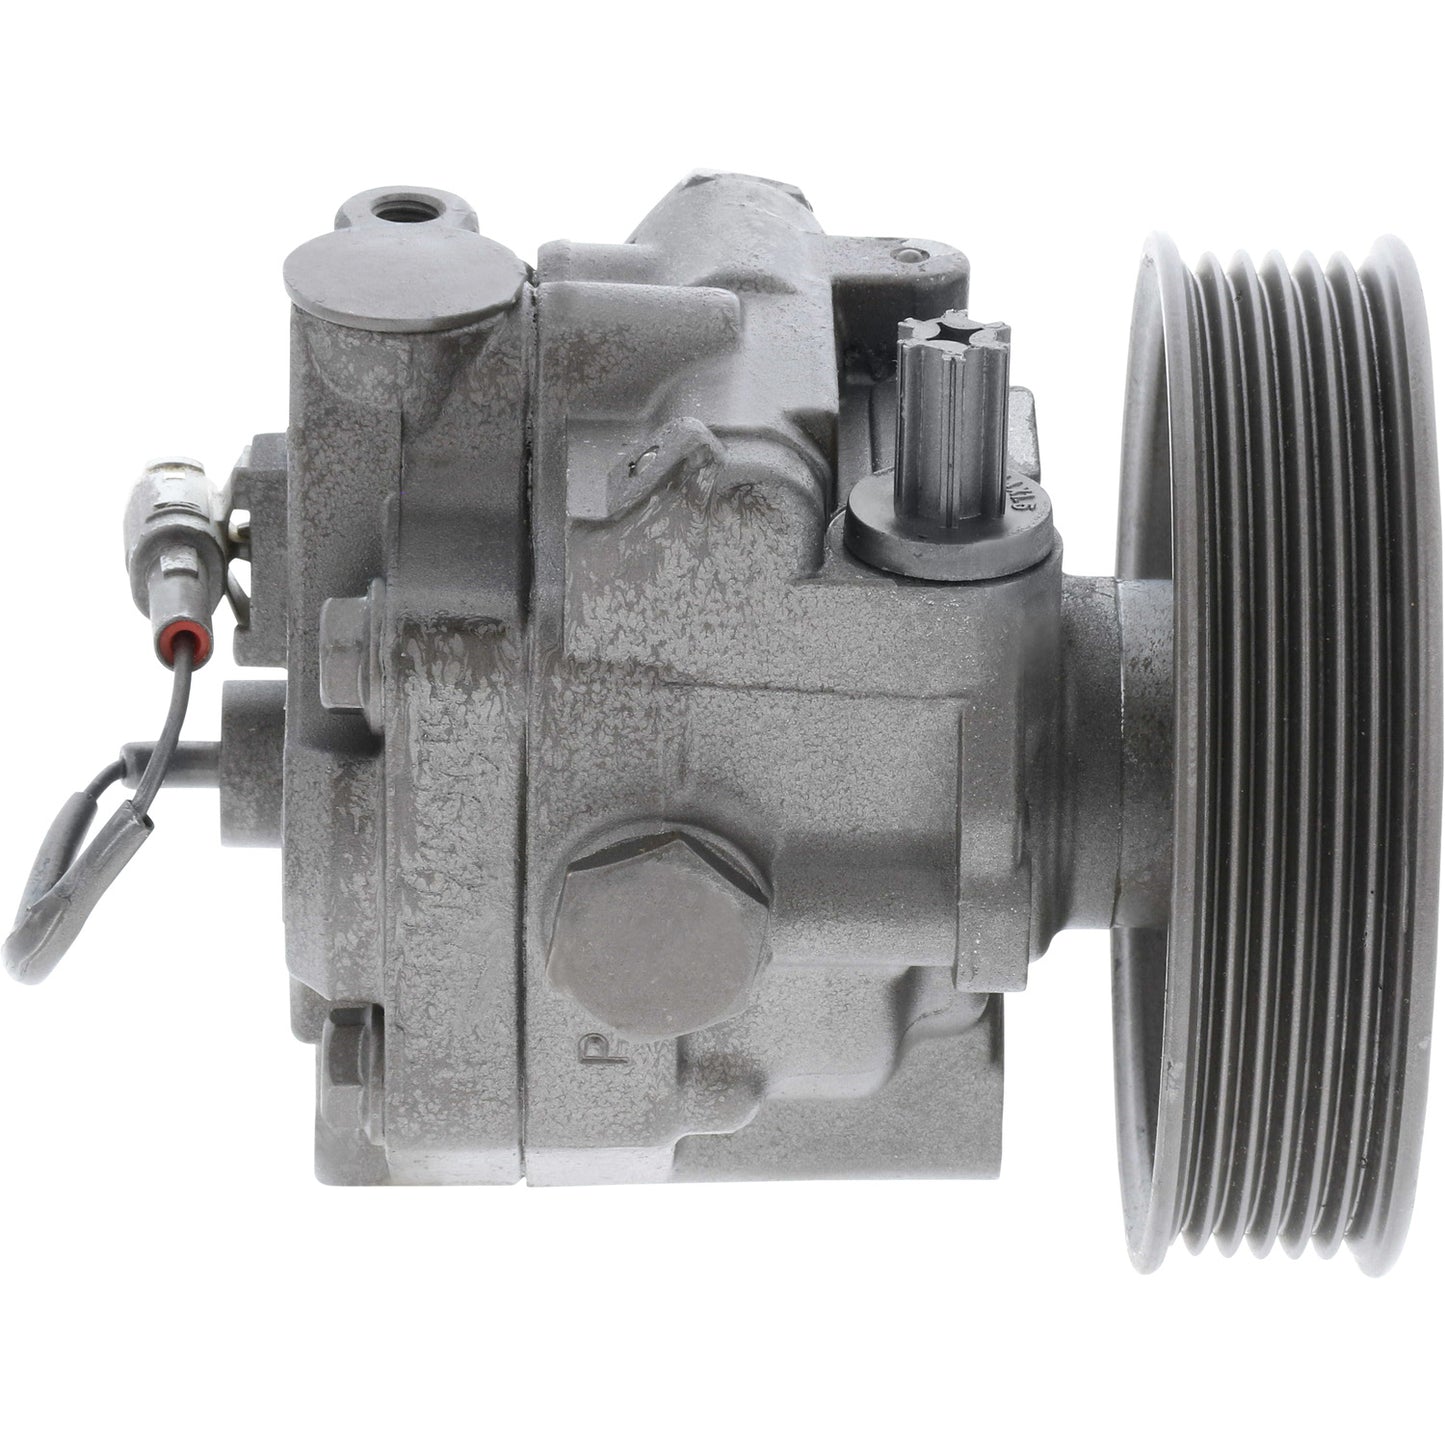 Power Steering Pump - MAVAL - Hydraulic Power - Remanufactured - 96474M